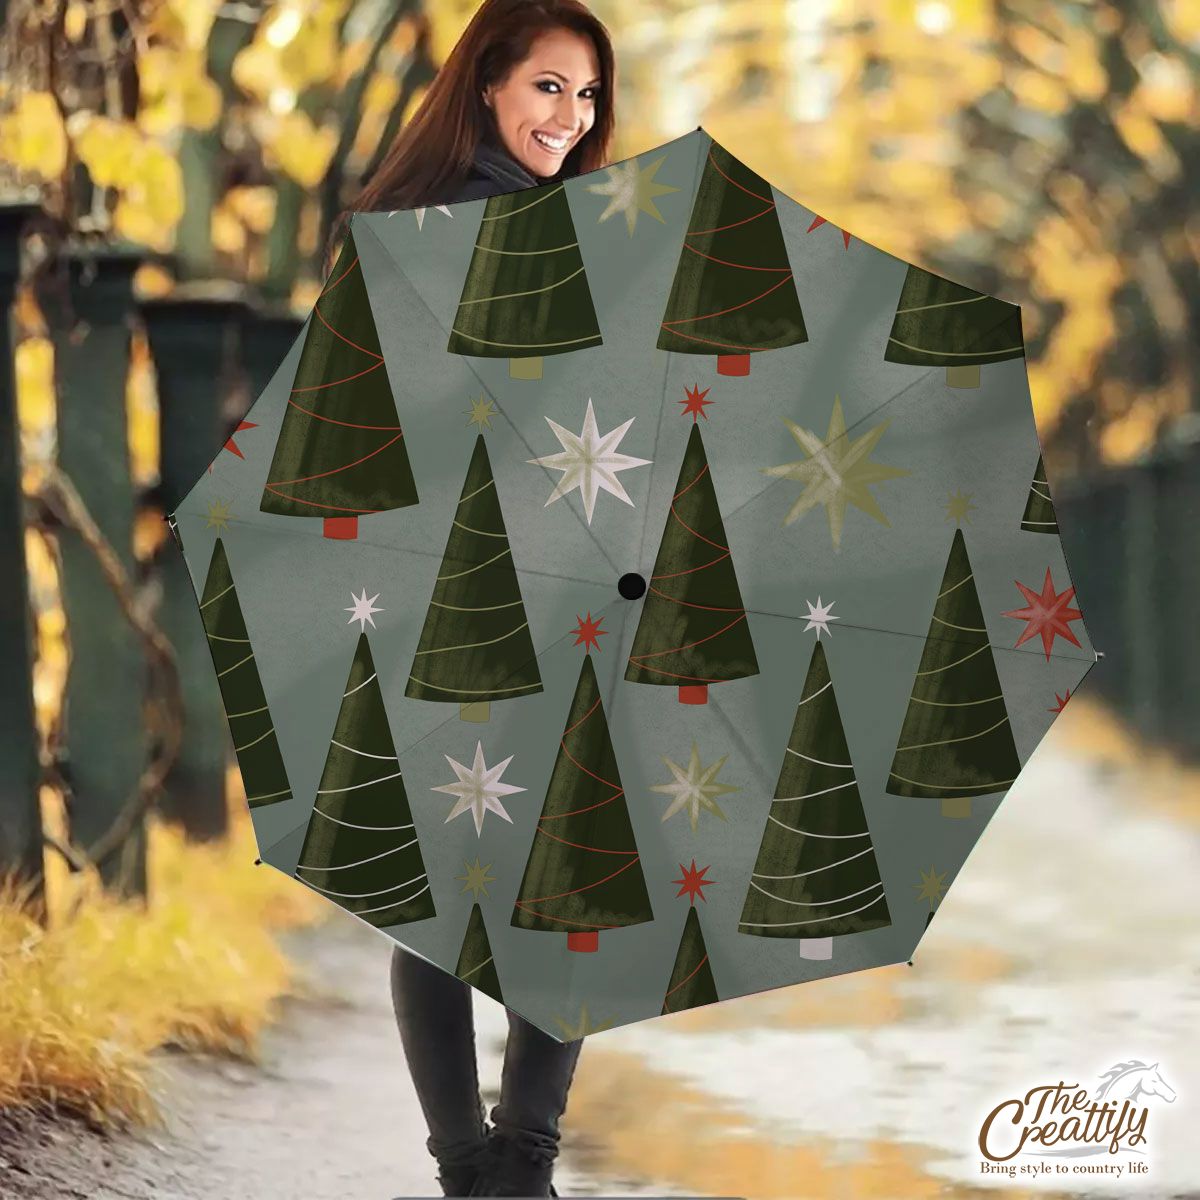 Christmas Tree, Pine Tree And Christmas Tree Star Umbrella